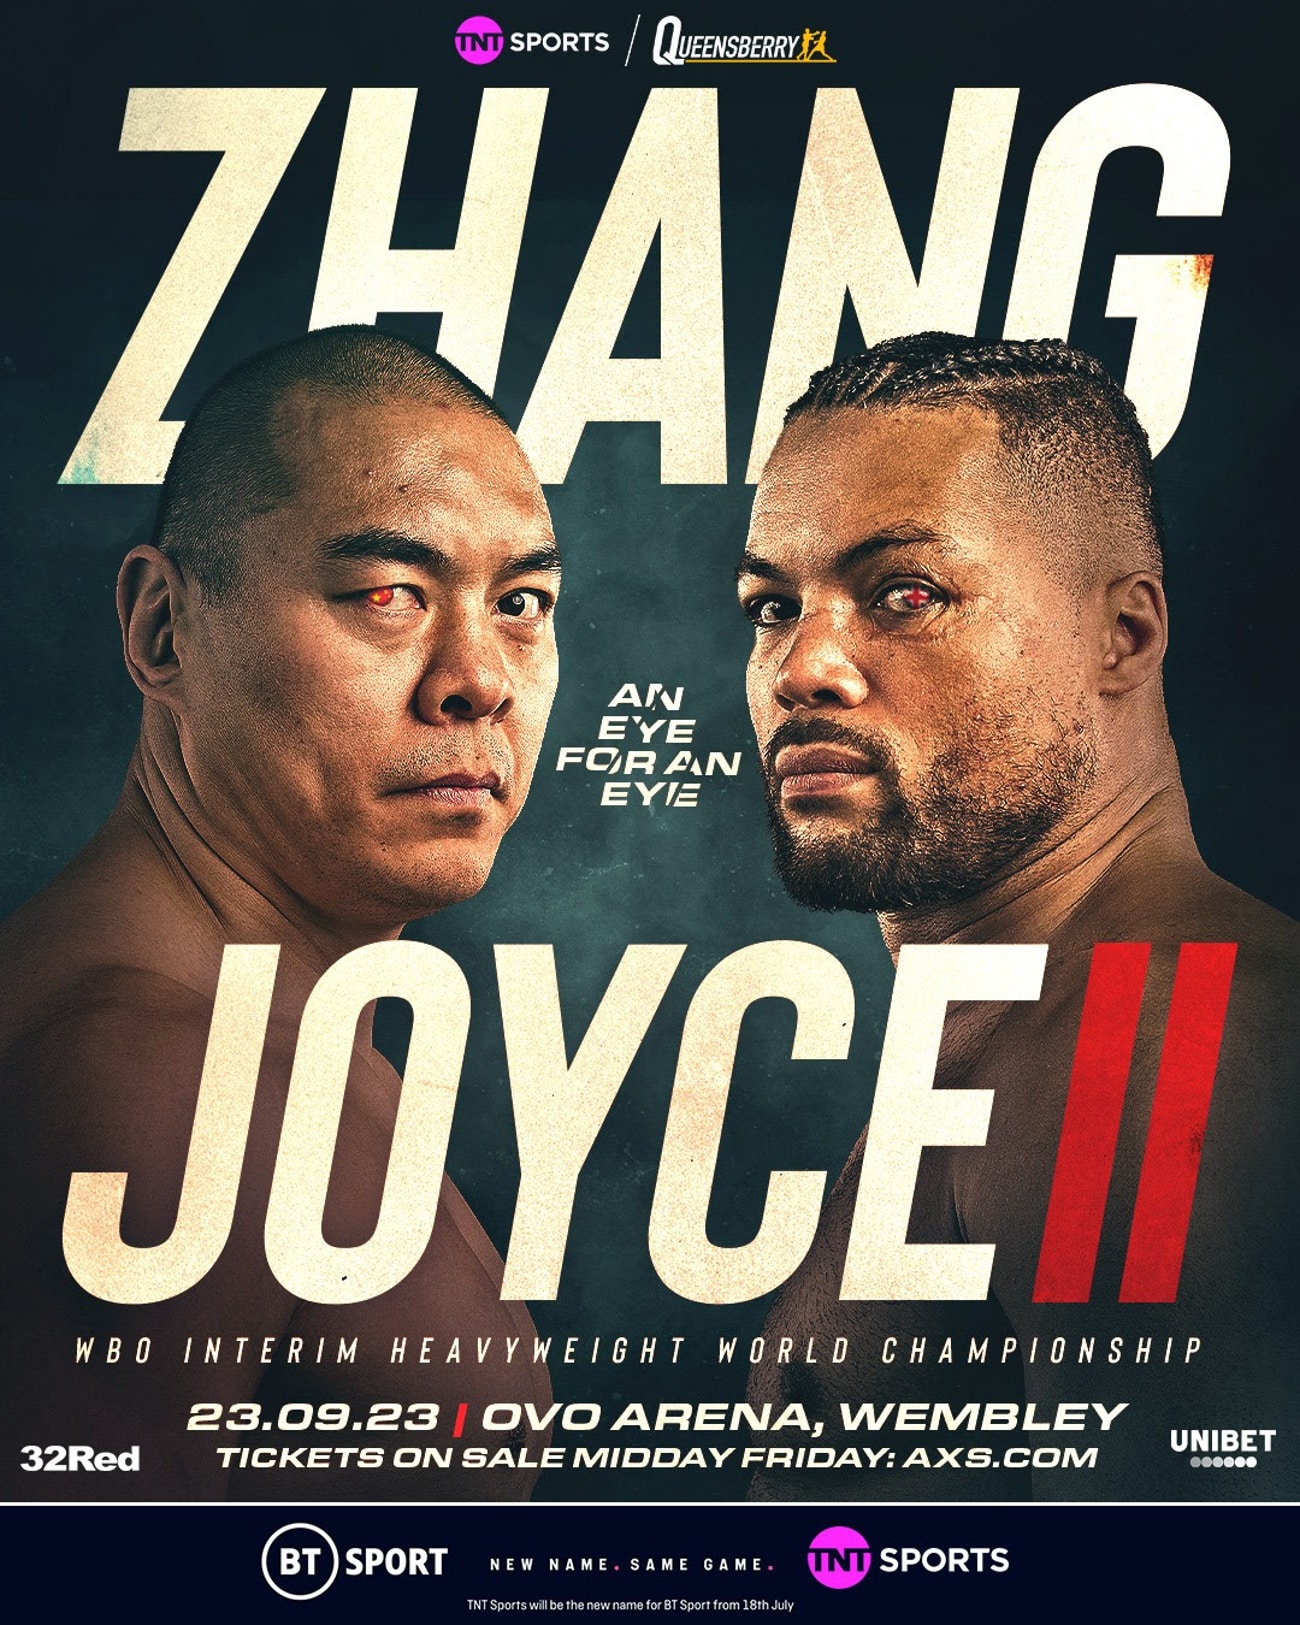 Image: Joe Joyce vs Zhilei Zhang rematch on September 23 in London